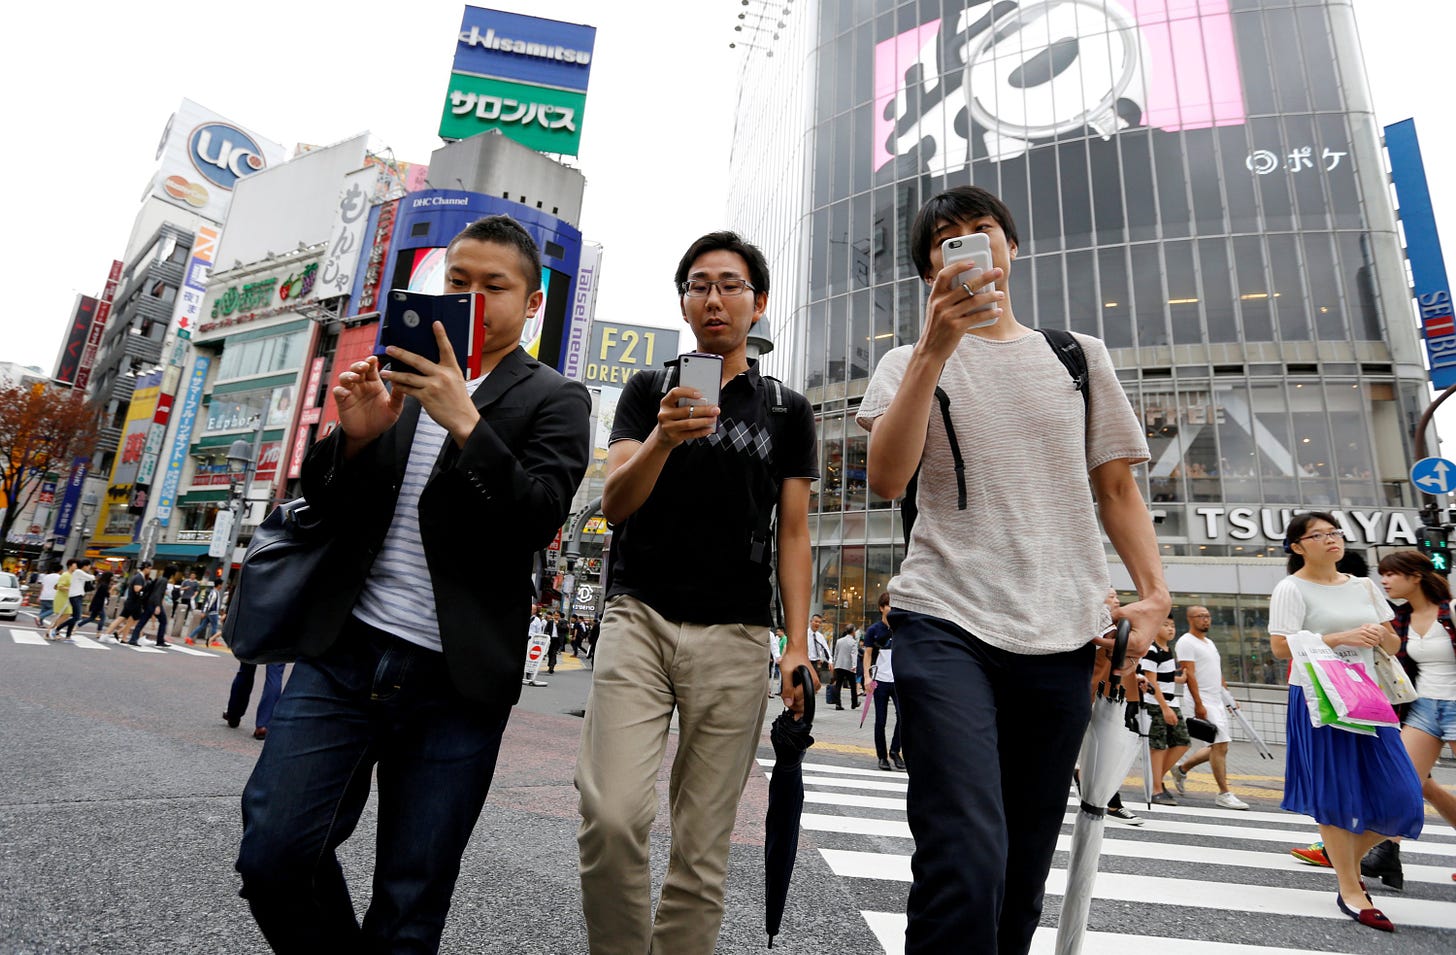 Japan's Yamato aims to ban phone use while walking | Daily Sabah